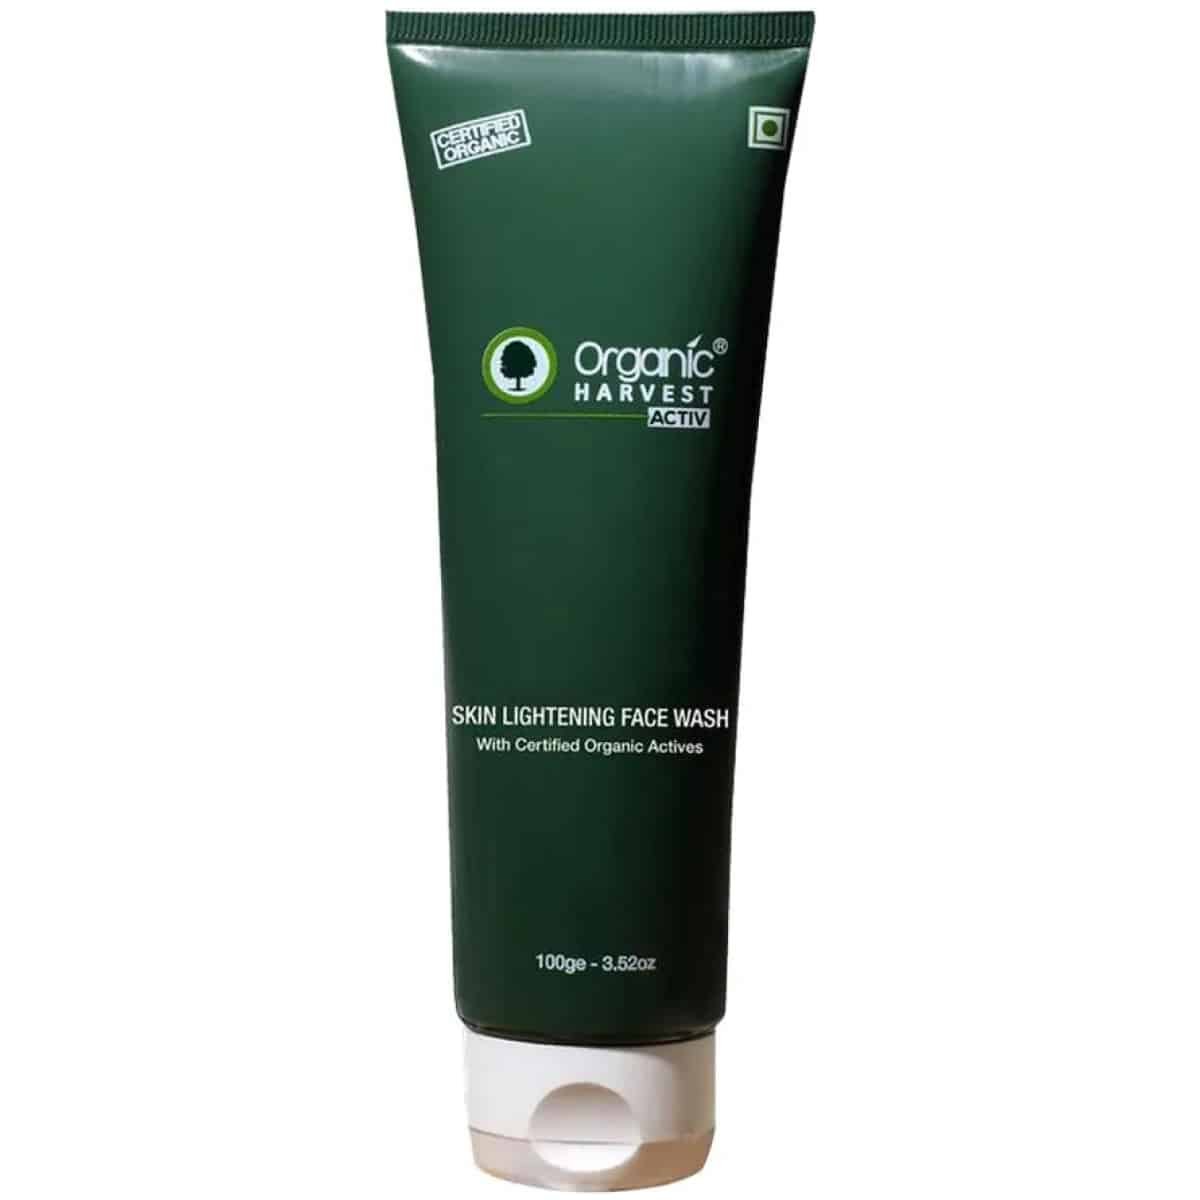 Organic Harvest Skin Lightening Face Wash 100 G